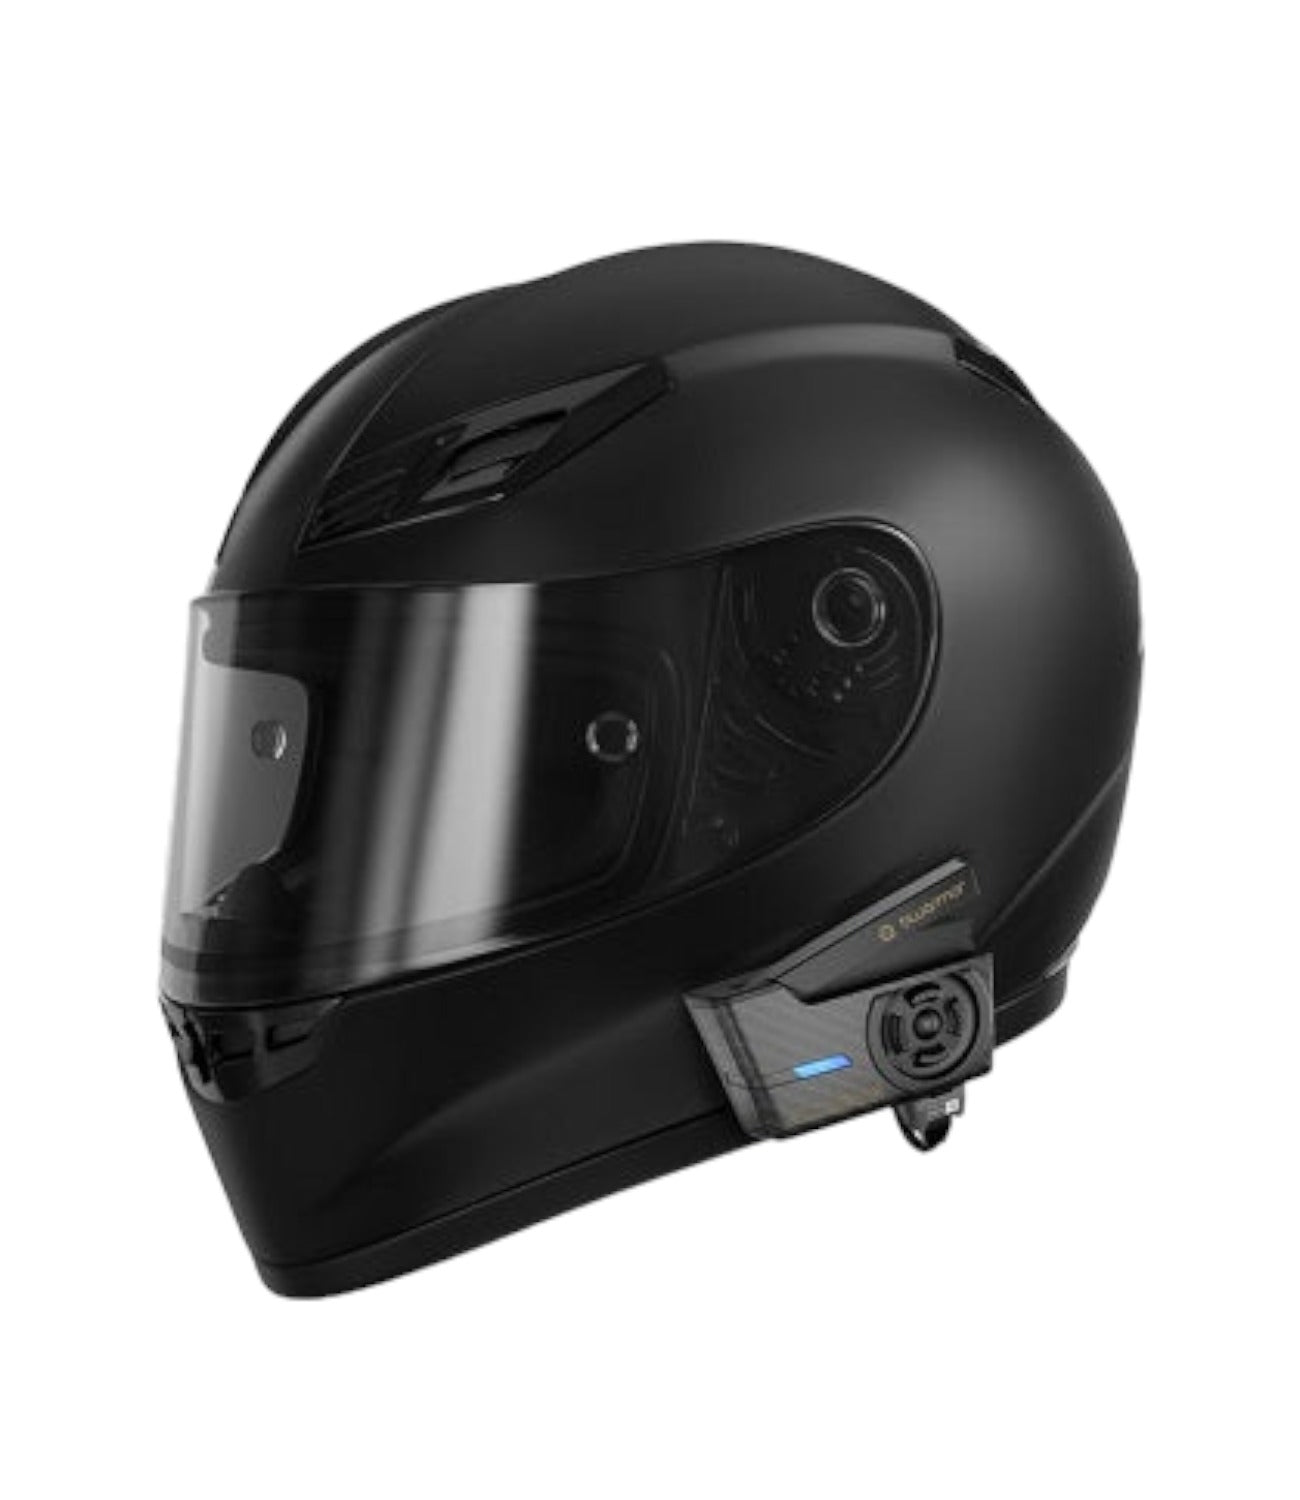 Combo Pack of 2 Bluarmour C30 Mesh Intercom / Helmet Communication Device